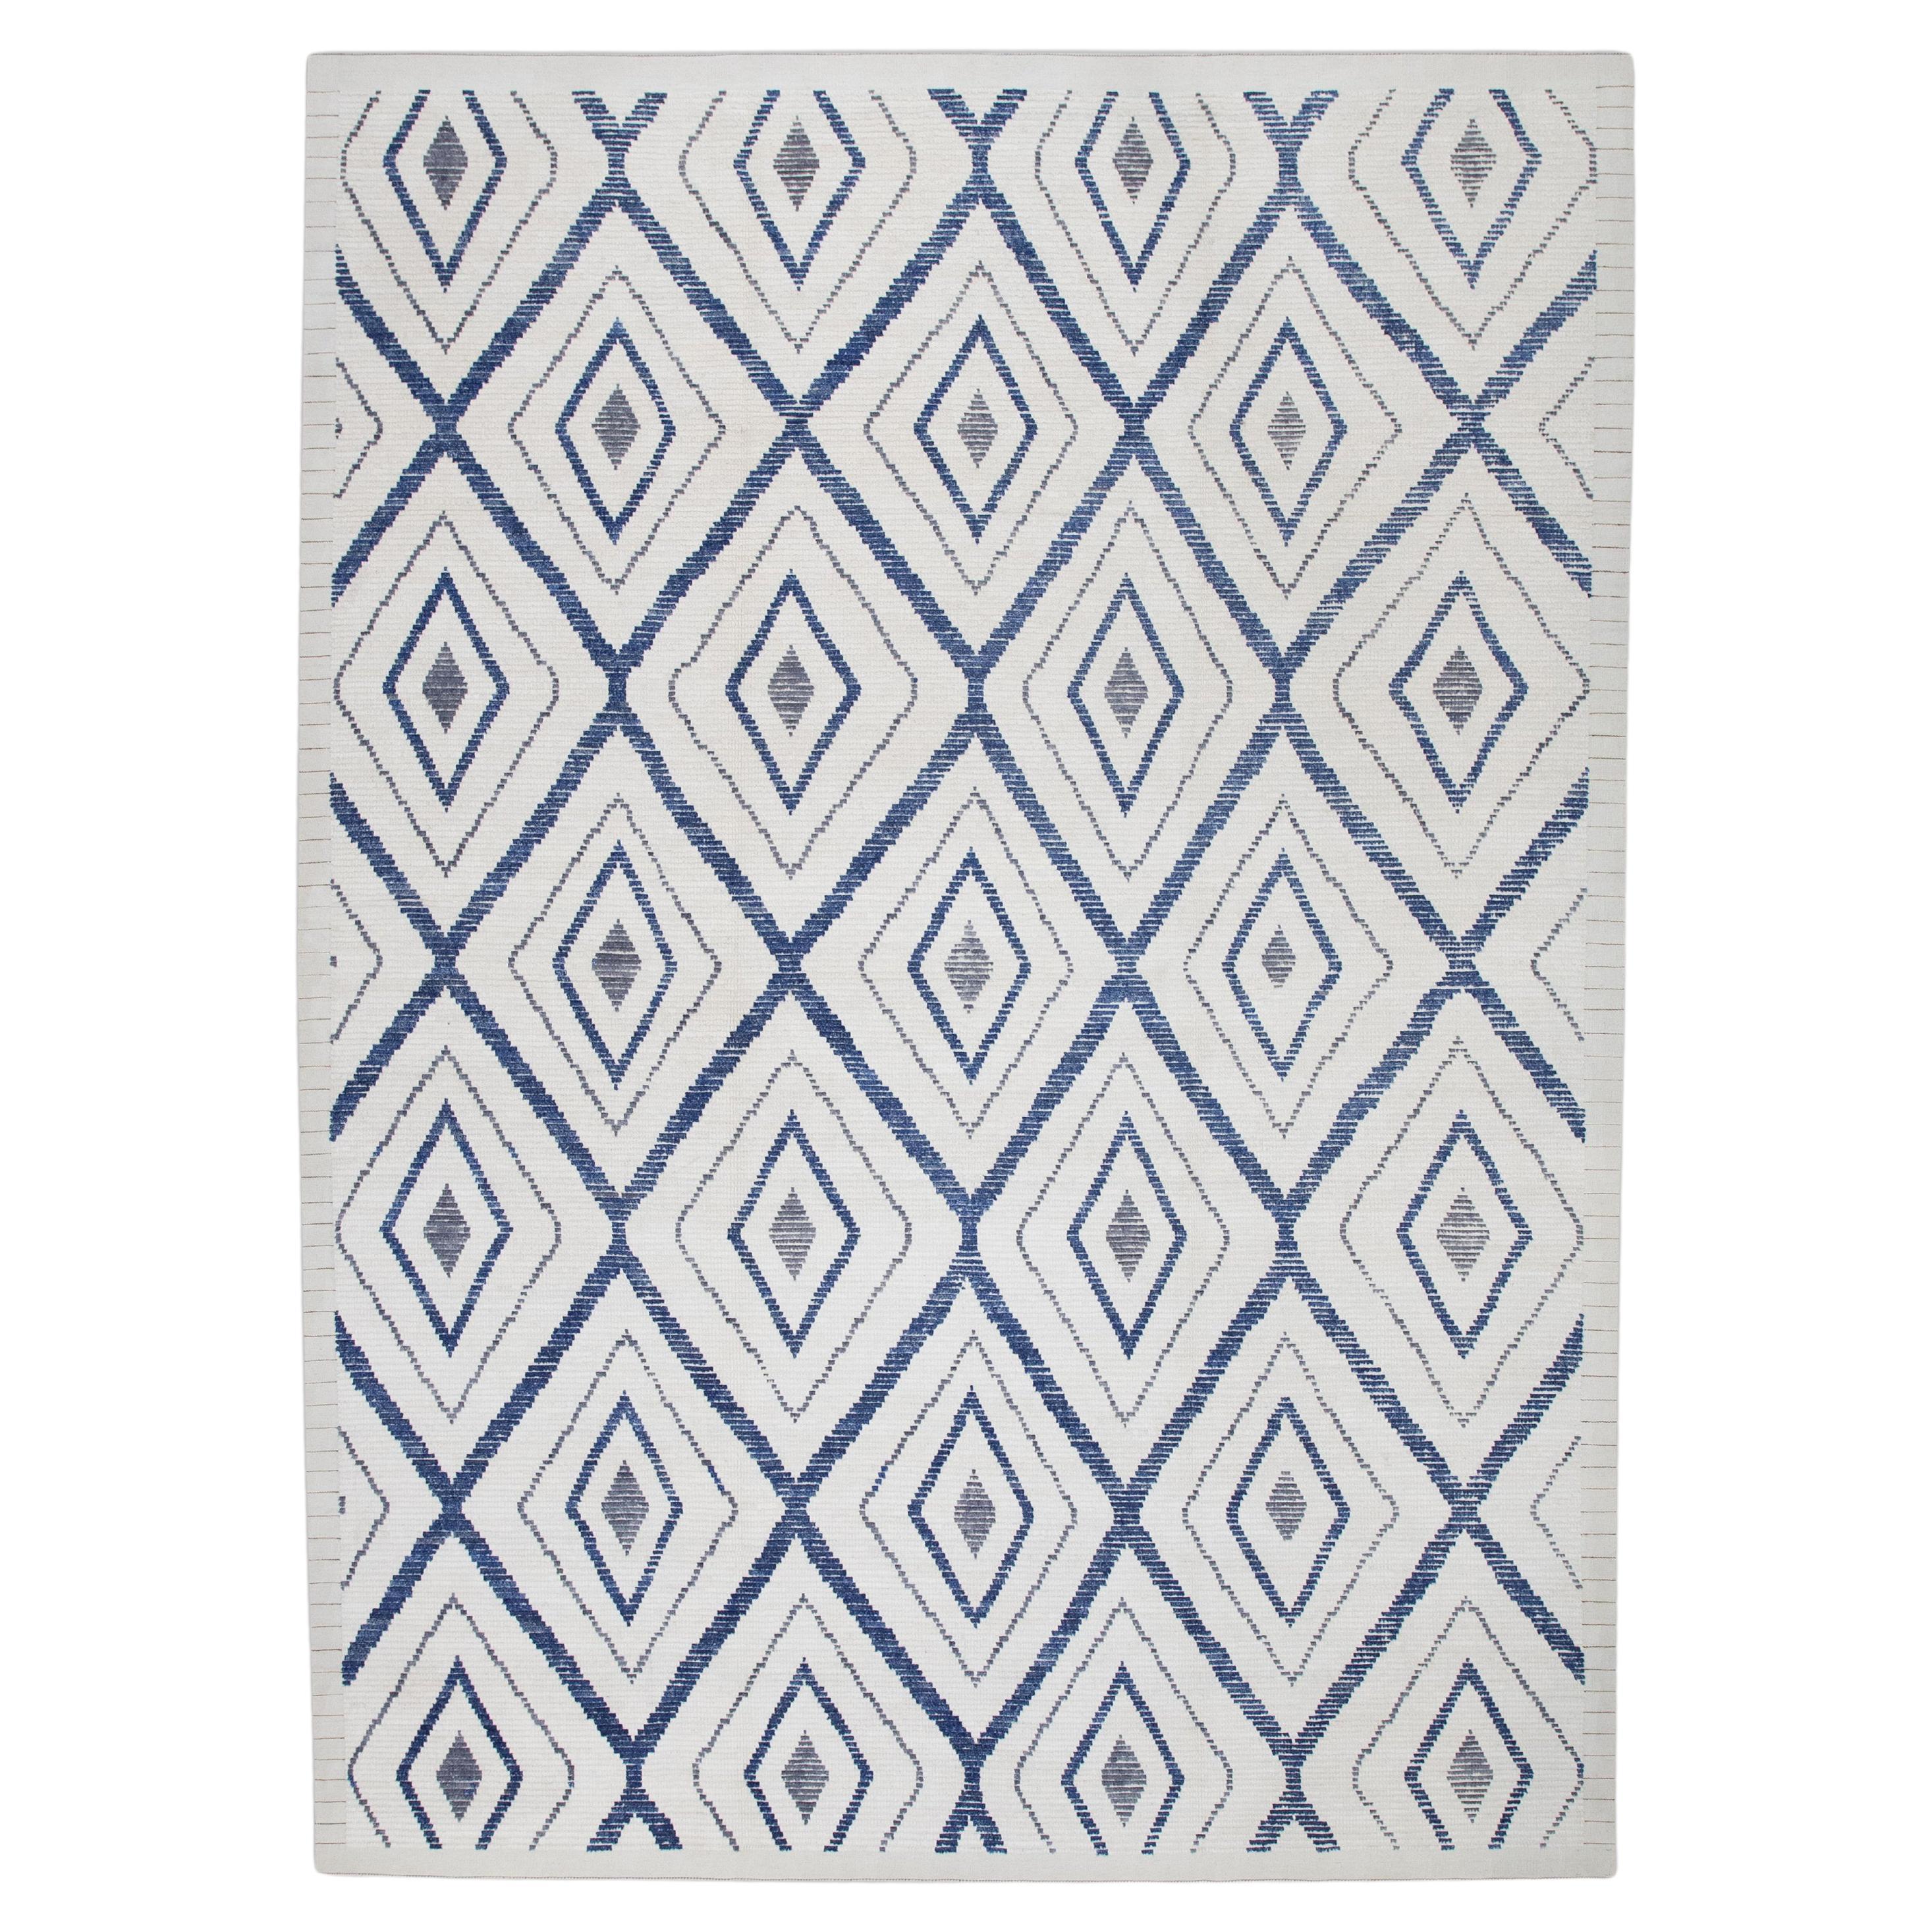  Handmade Wool Tulu Rug in Geometric Design 9'4" x 12'6" For Sale